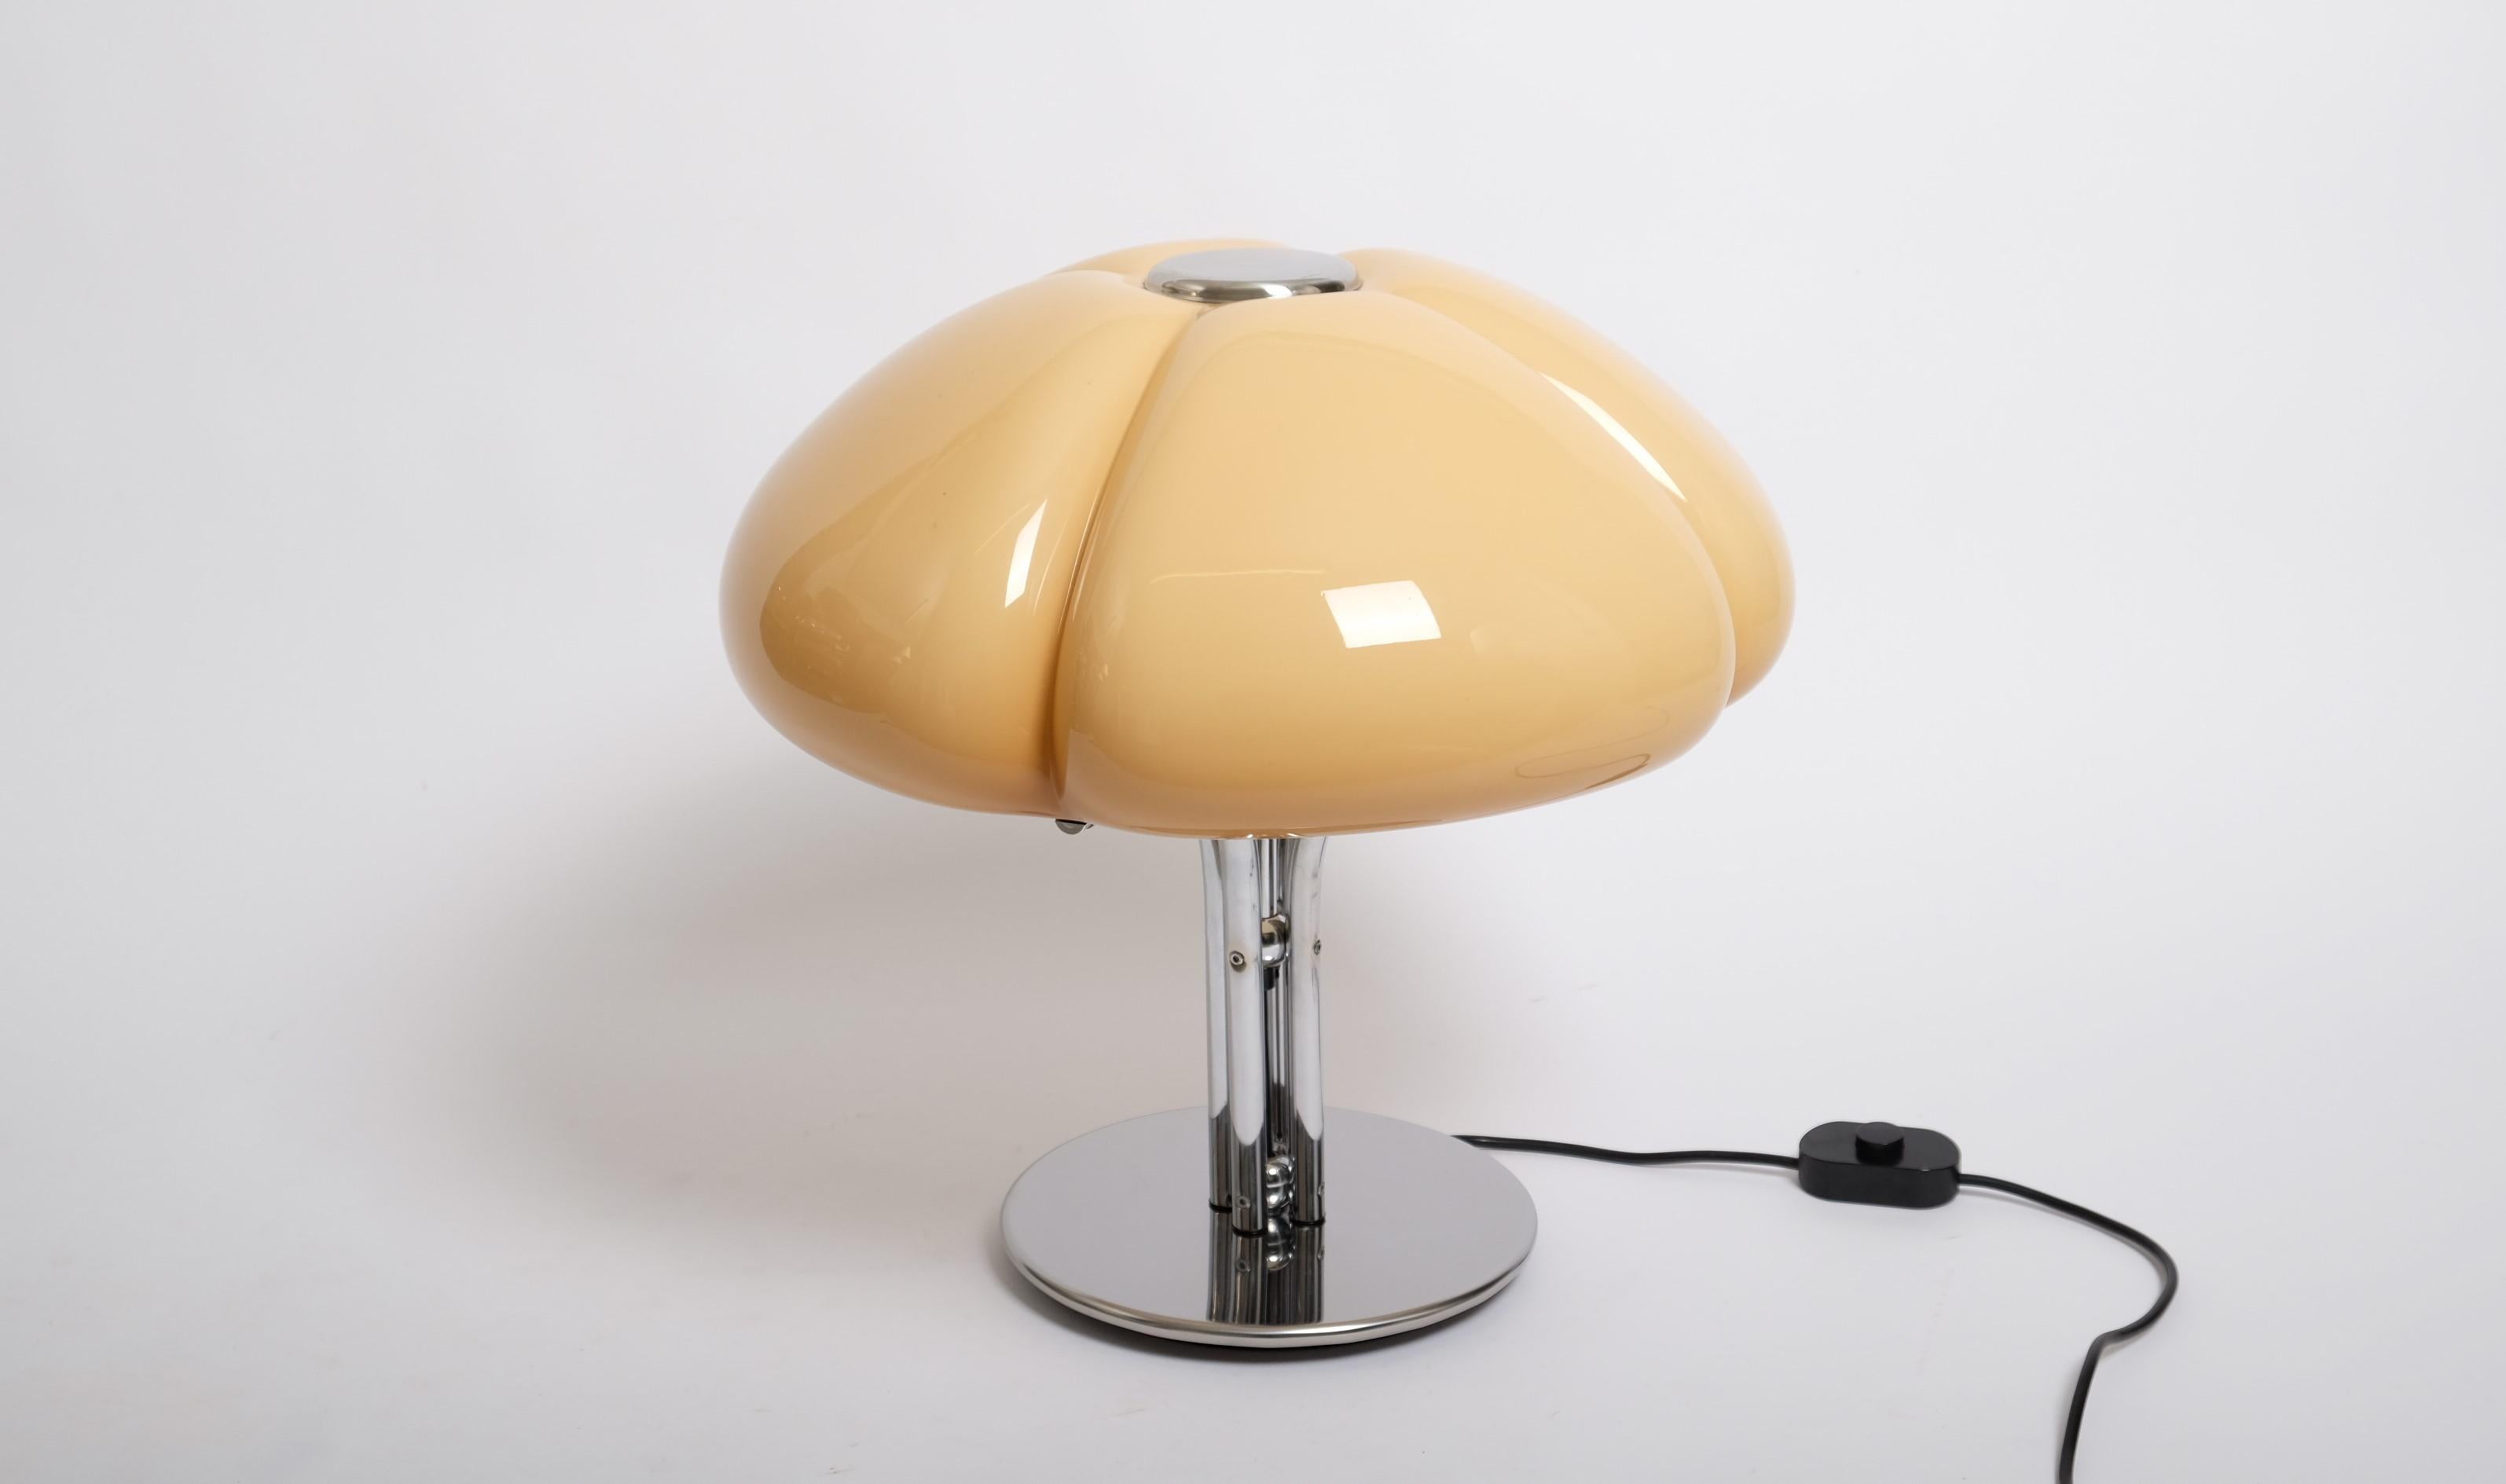 Mid-Century Modern Quadrifoglio Table Lamp by Gae Aulenti for Guzzini, Italy 1960s